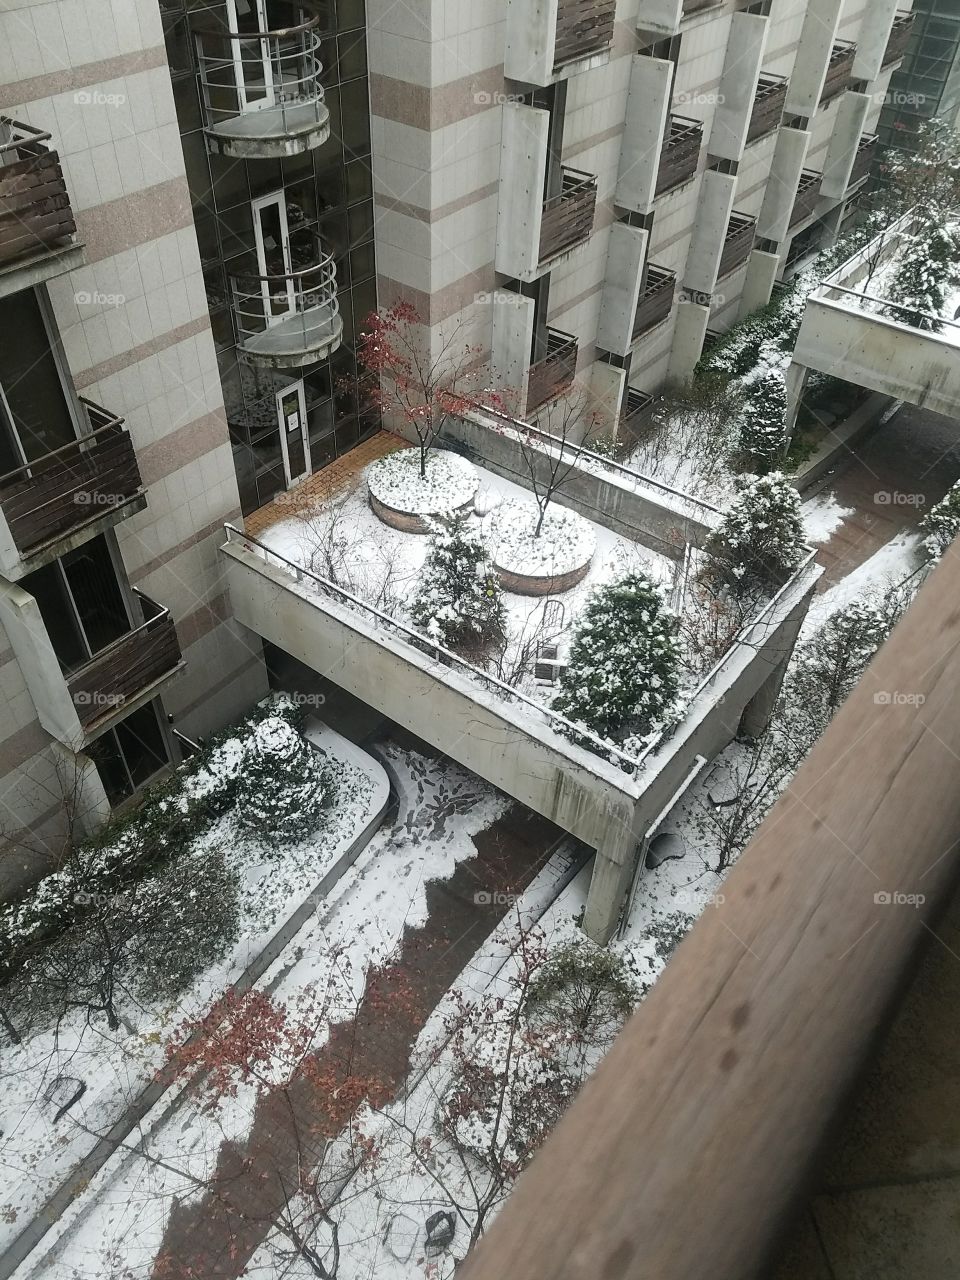 EWHA Campus engulfed in snow